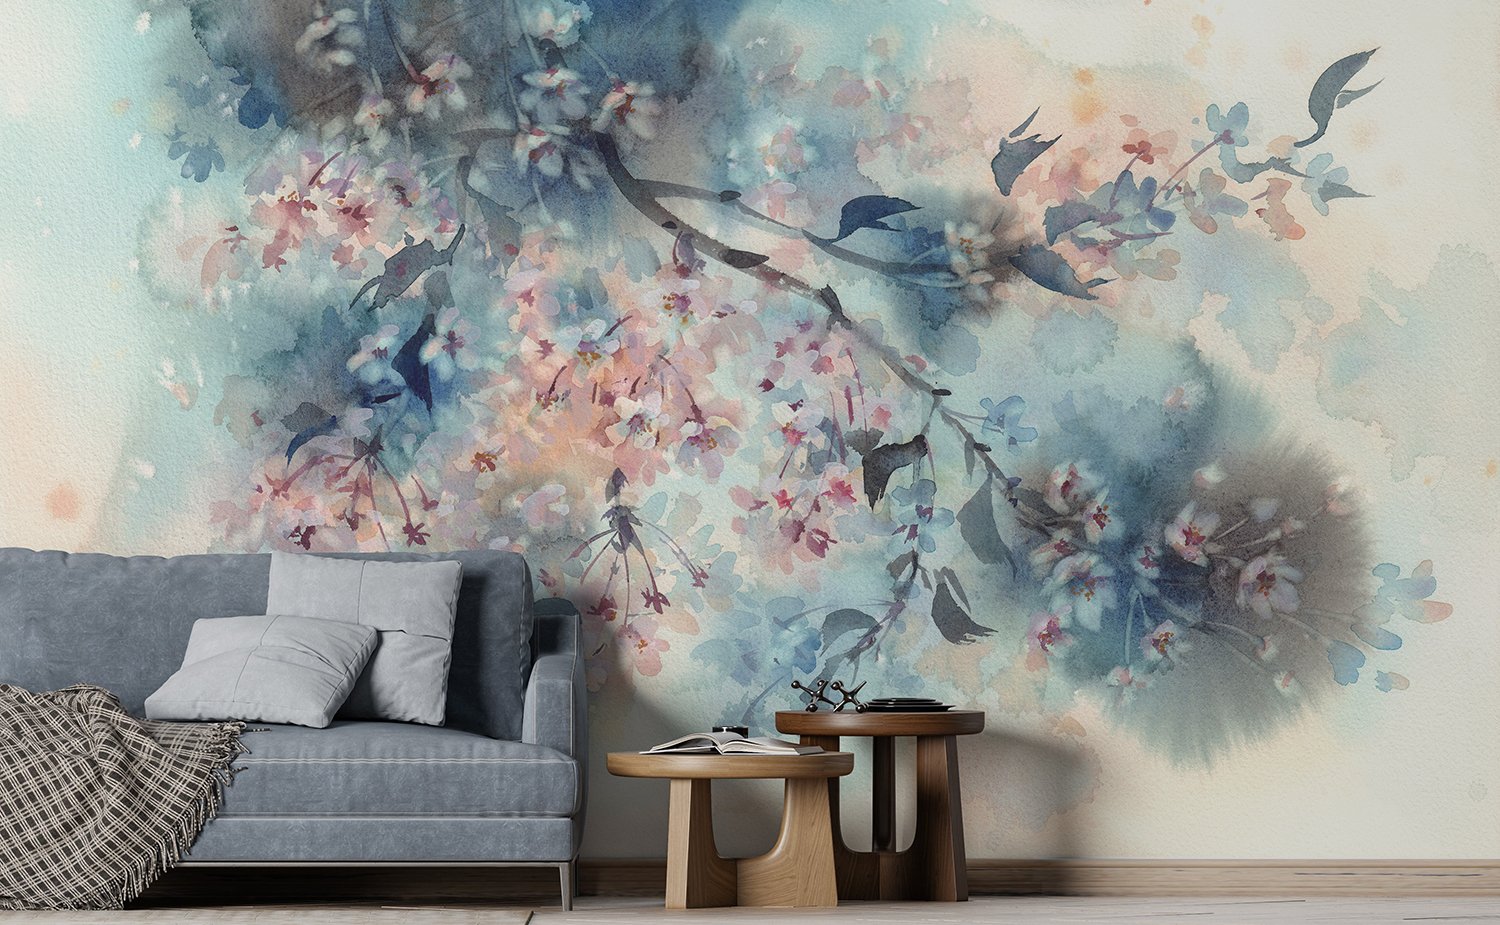 Unique Wallpaper Designs for Your Living Room